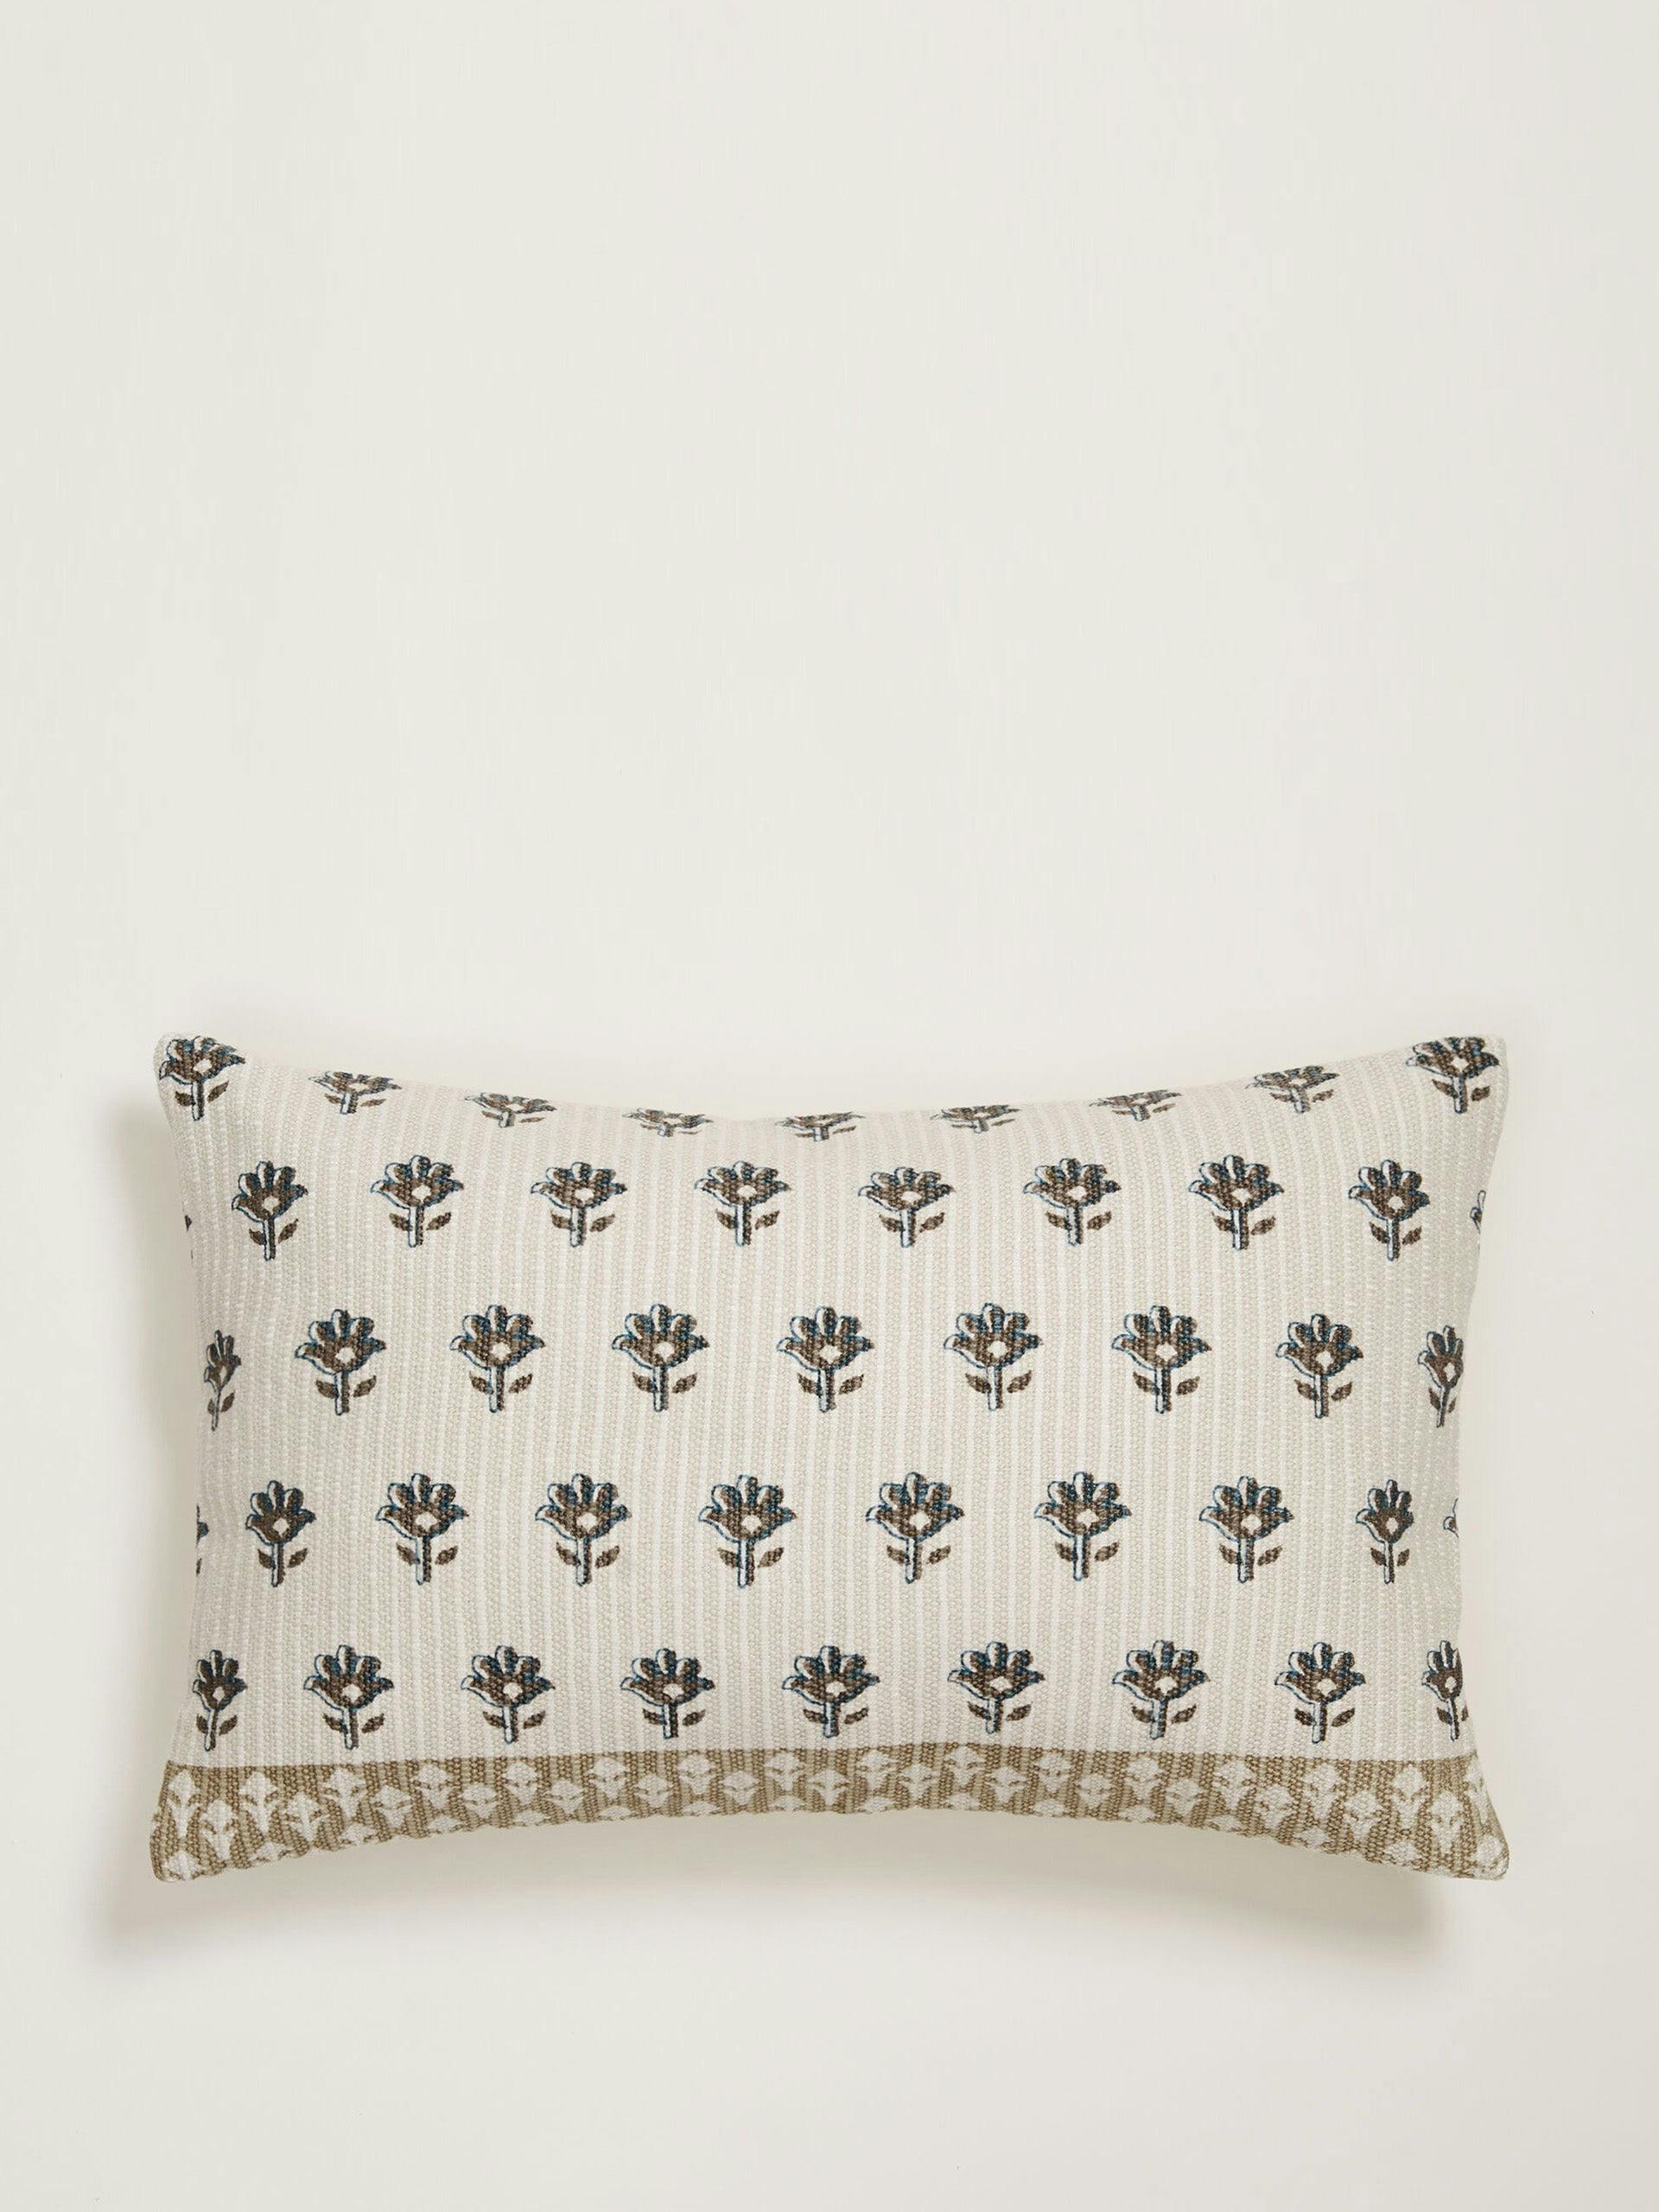 Hand-woven block printed cushion